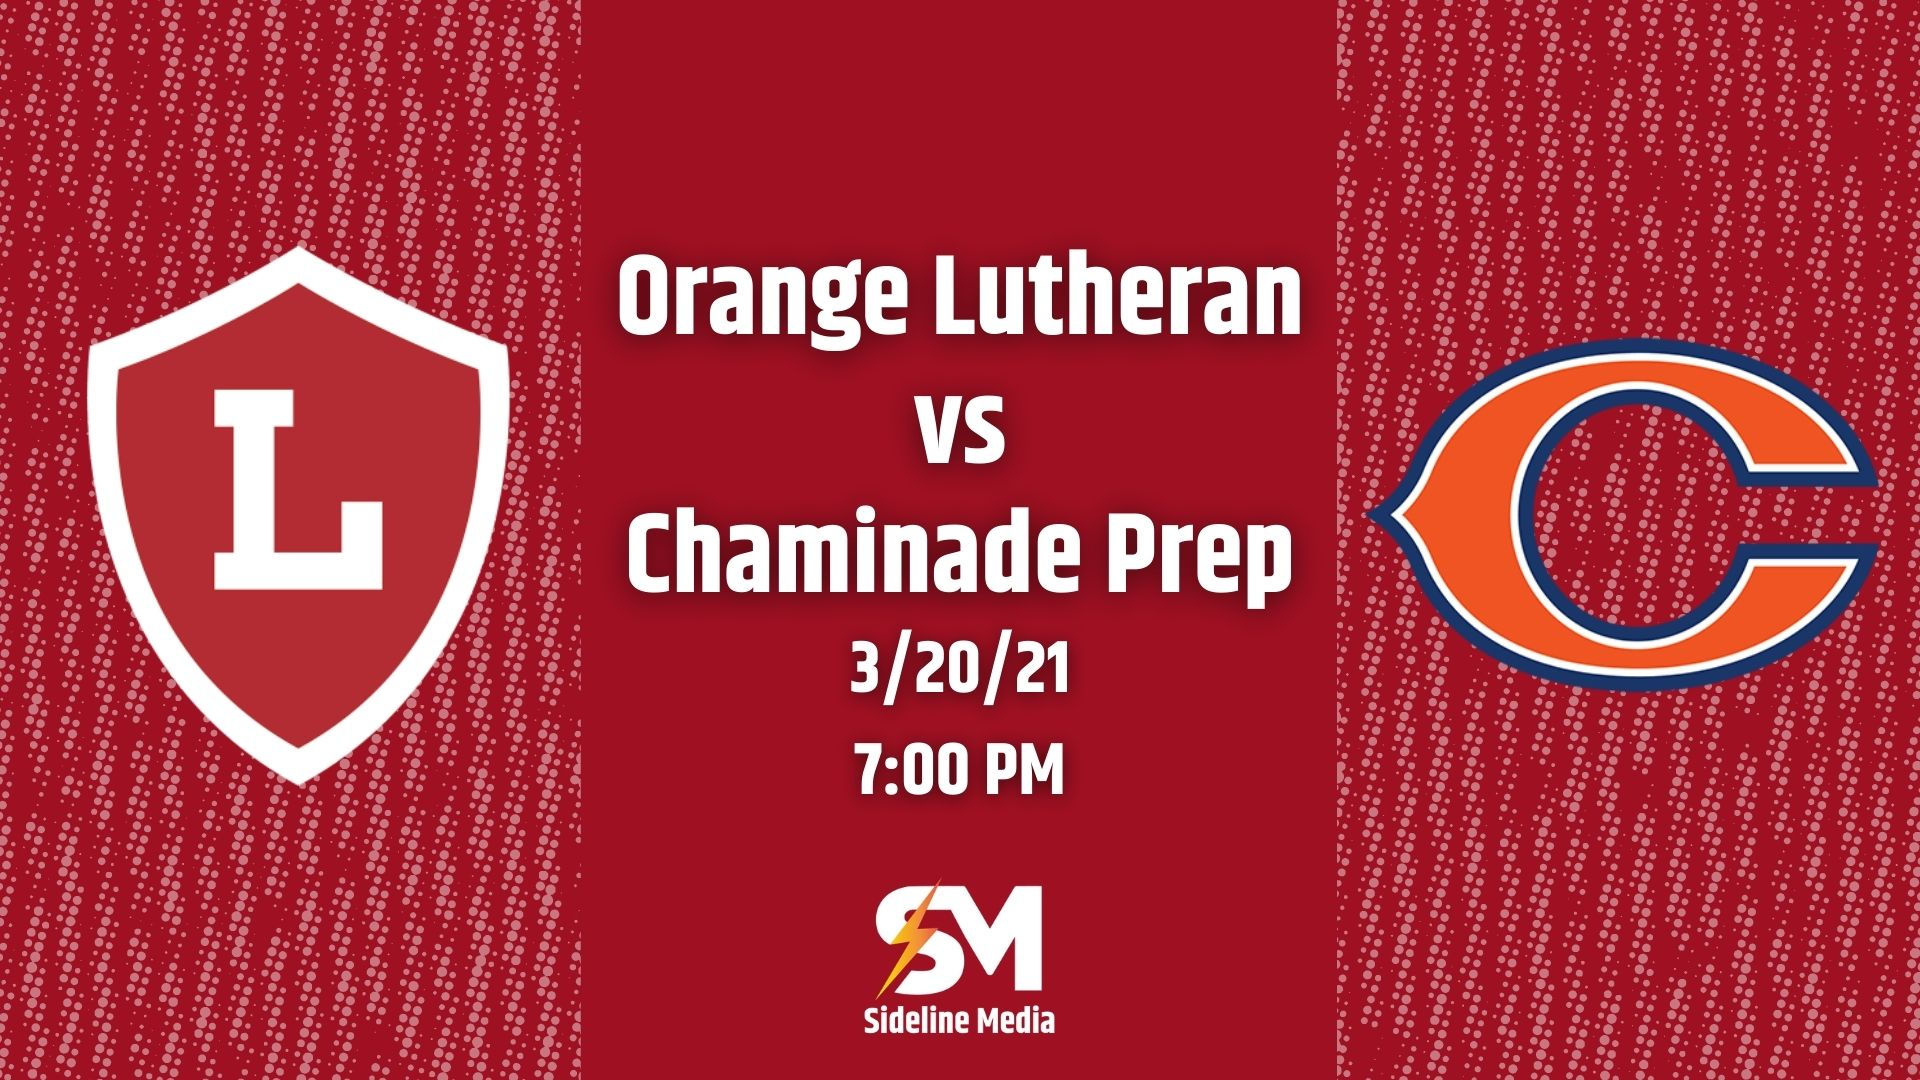 Photo for Orange Lutheran HS vs Chaminade Prep 3/20/21 on ViewStub